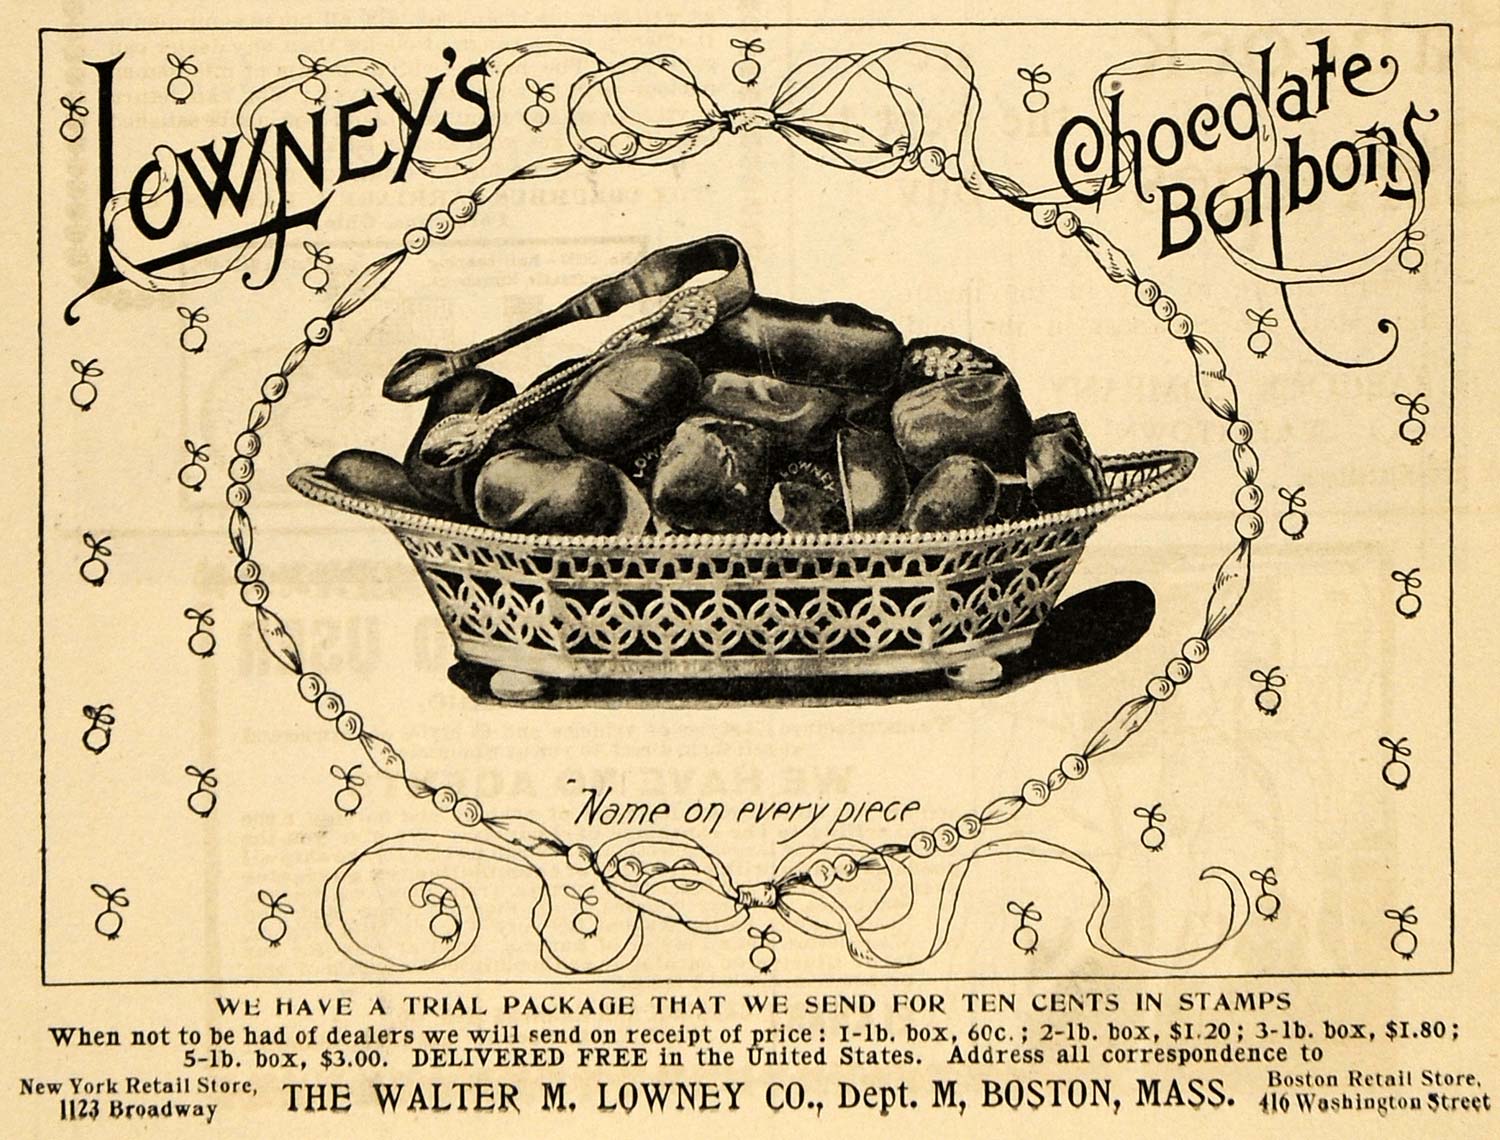 1900 Ad Walter Lowneys Chocolates Bonbons Candy Child - ORIGINAL TOM3